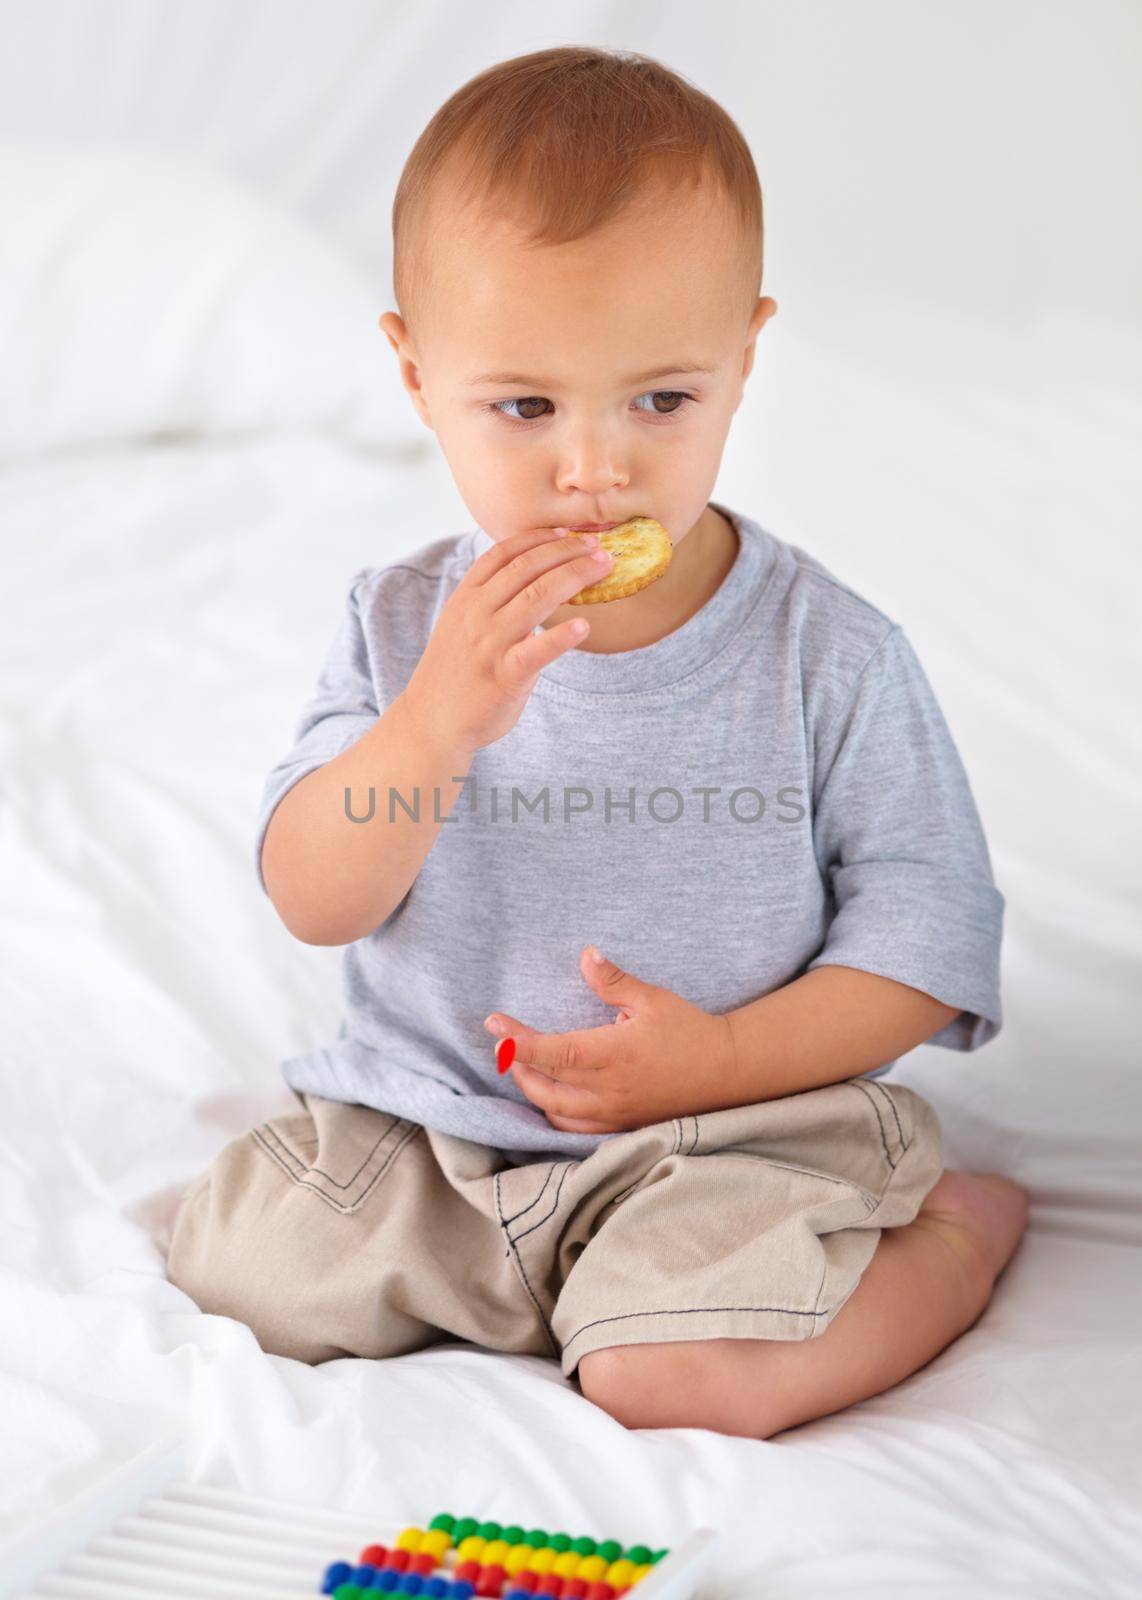 Eating a tasty cracker. A cute little boy eating a tasty cracker